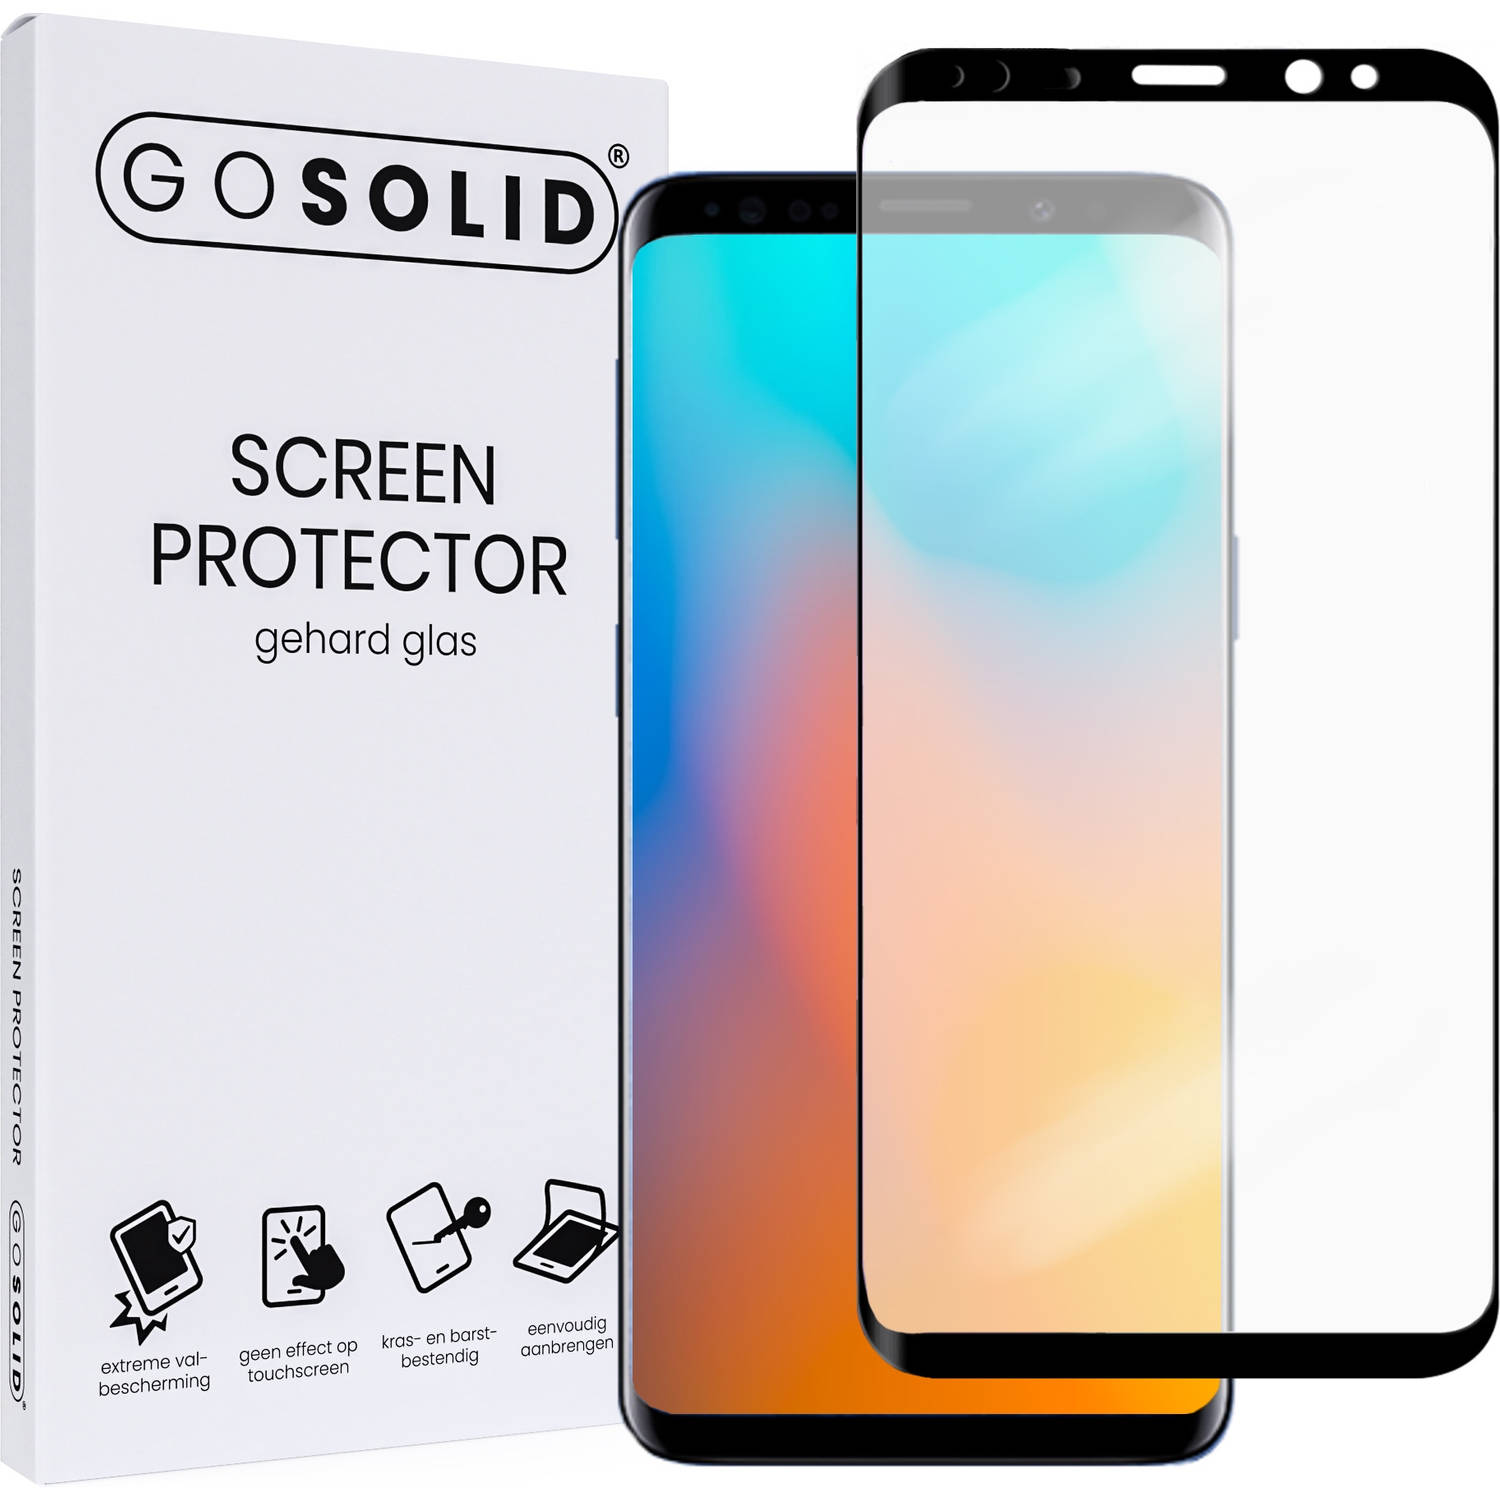 GO SOLID! ® screenprotector Samsung Galaxy S9 - gehard glas